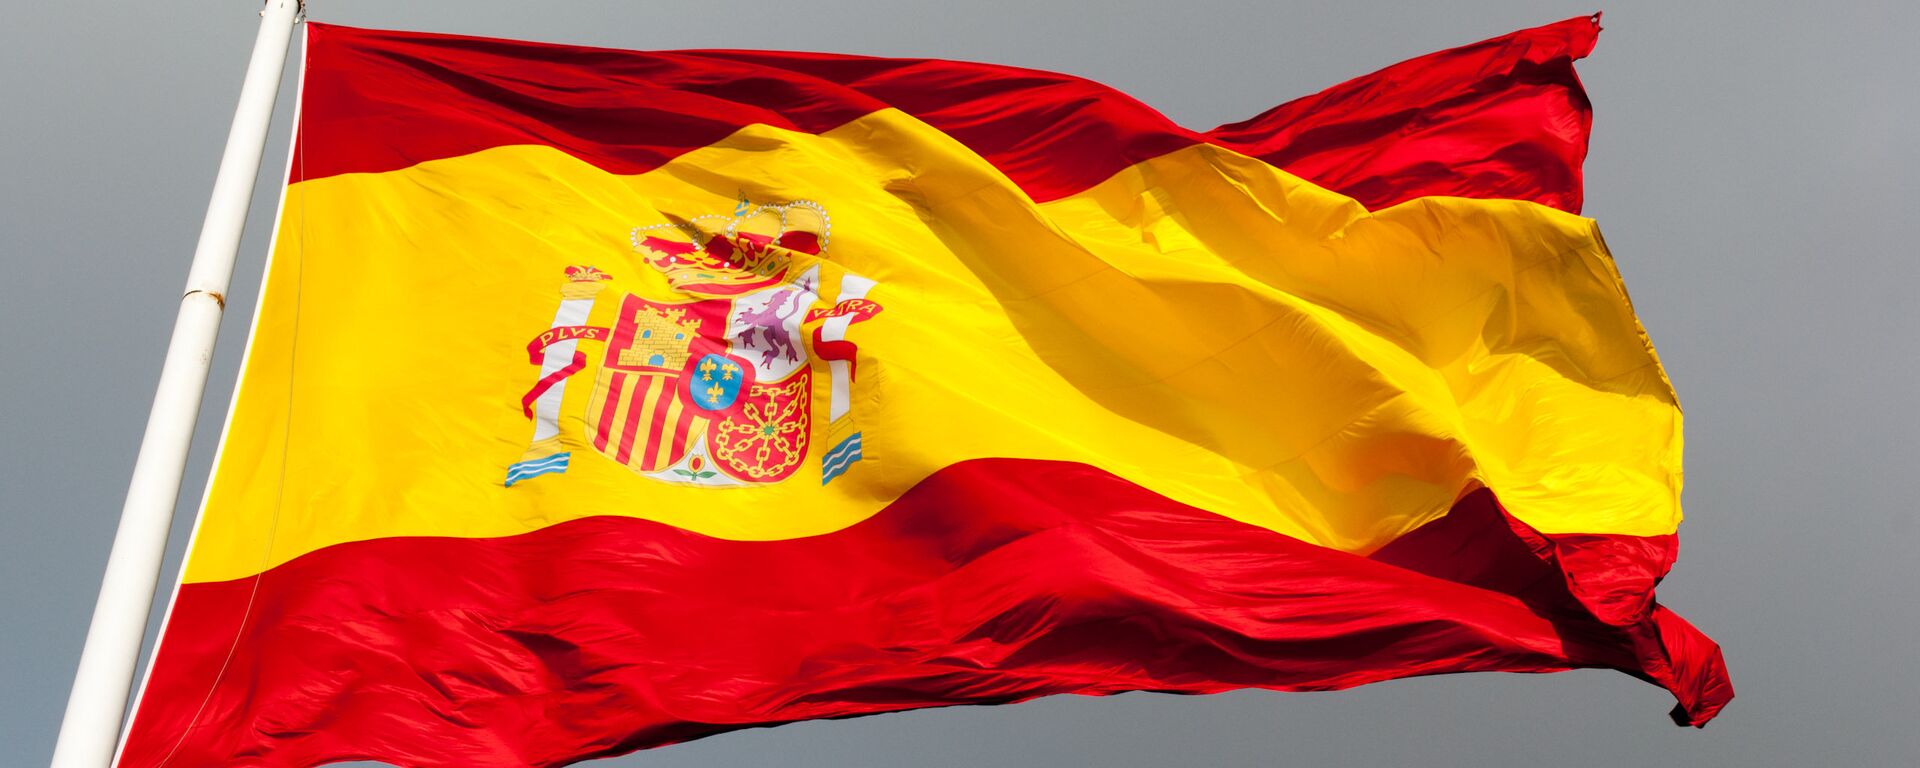 Bandera de España - Sputnik Mundo, 1920, 14.04.2021